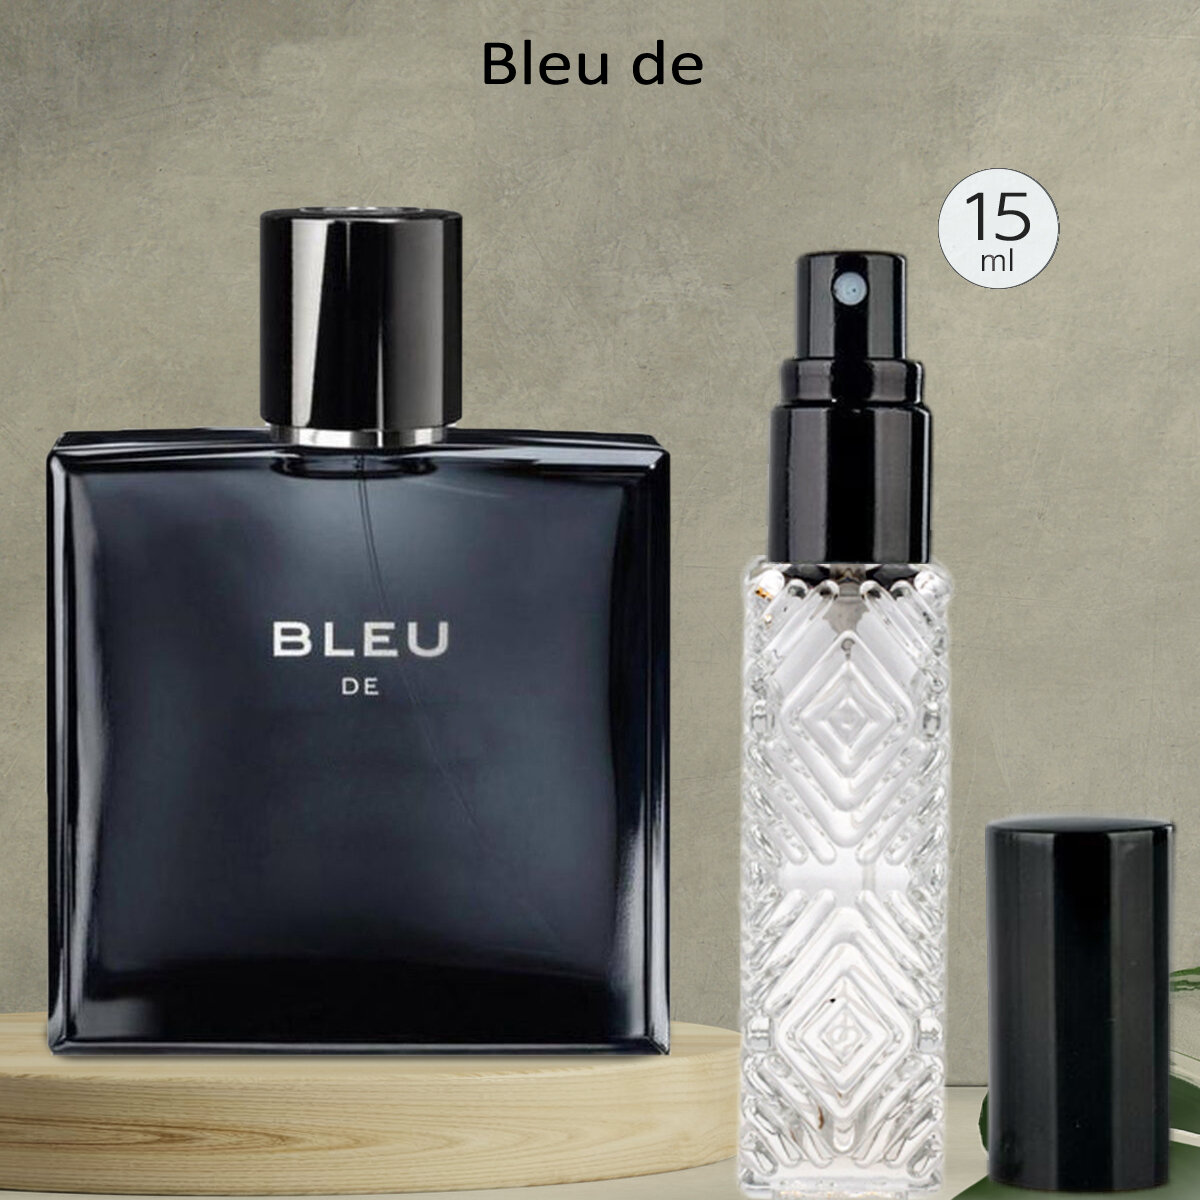 Gratus Parfum Bleu de духи мужские масляные 15 мл (спрей) + подарок